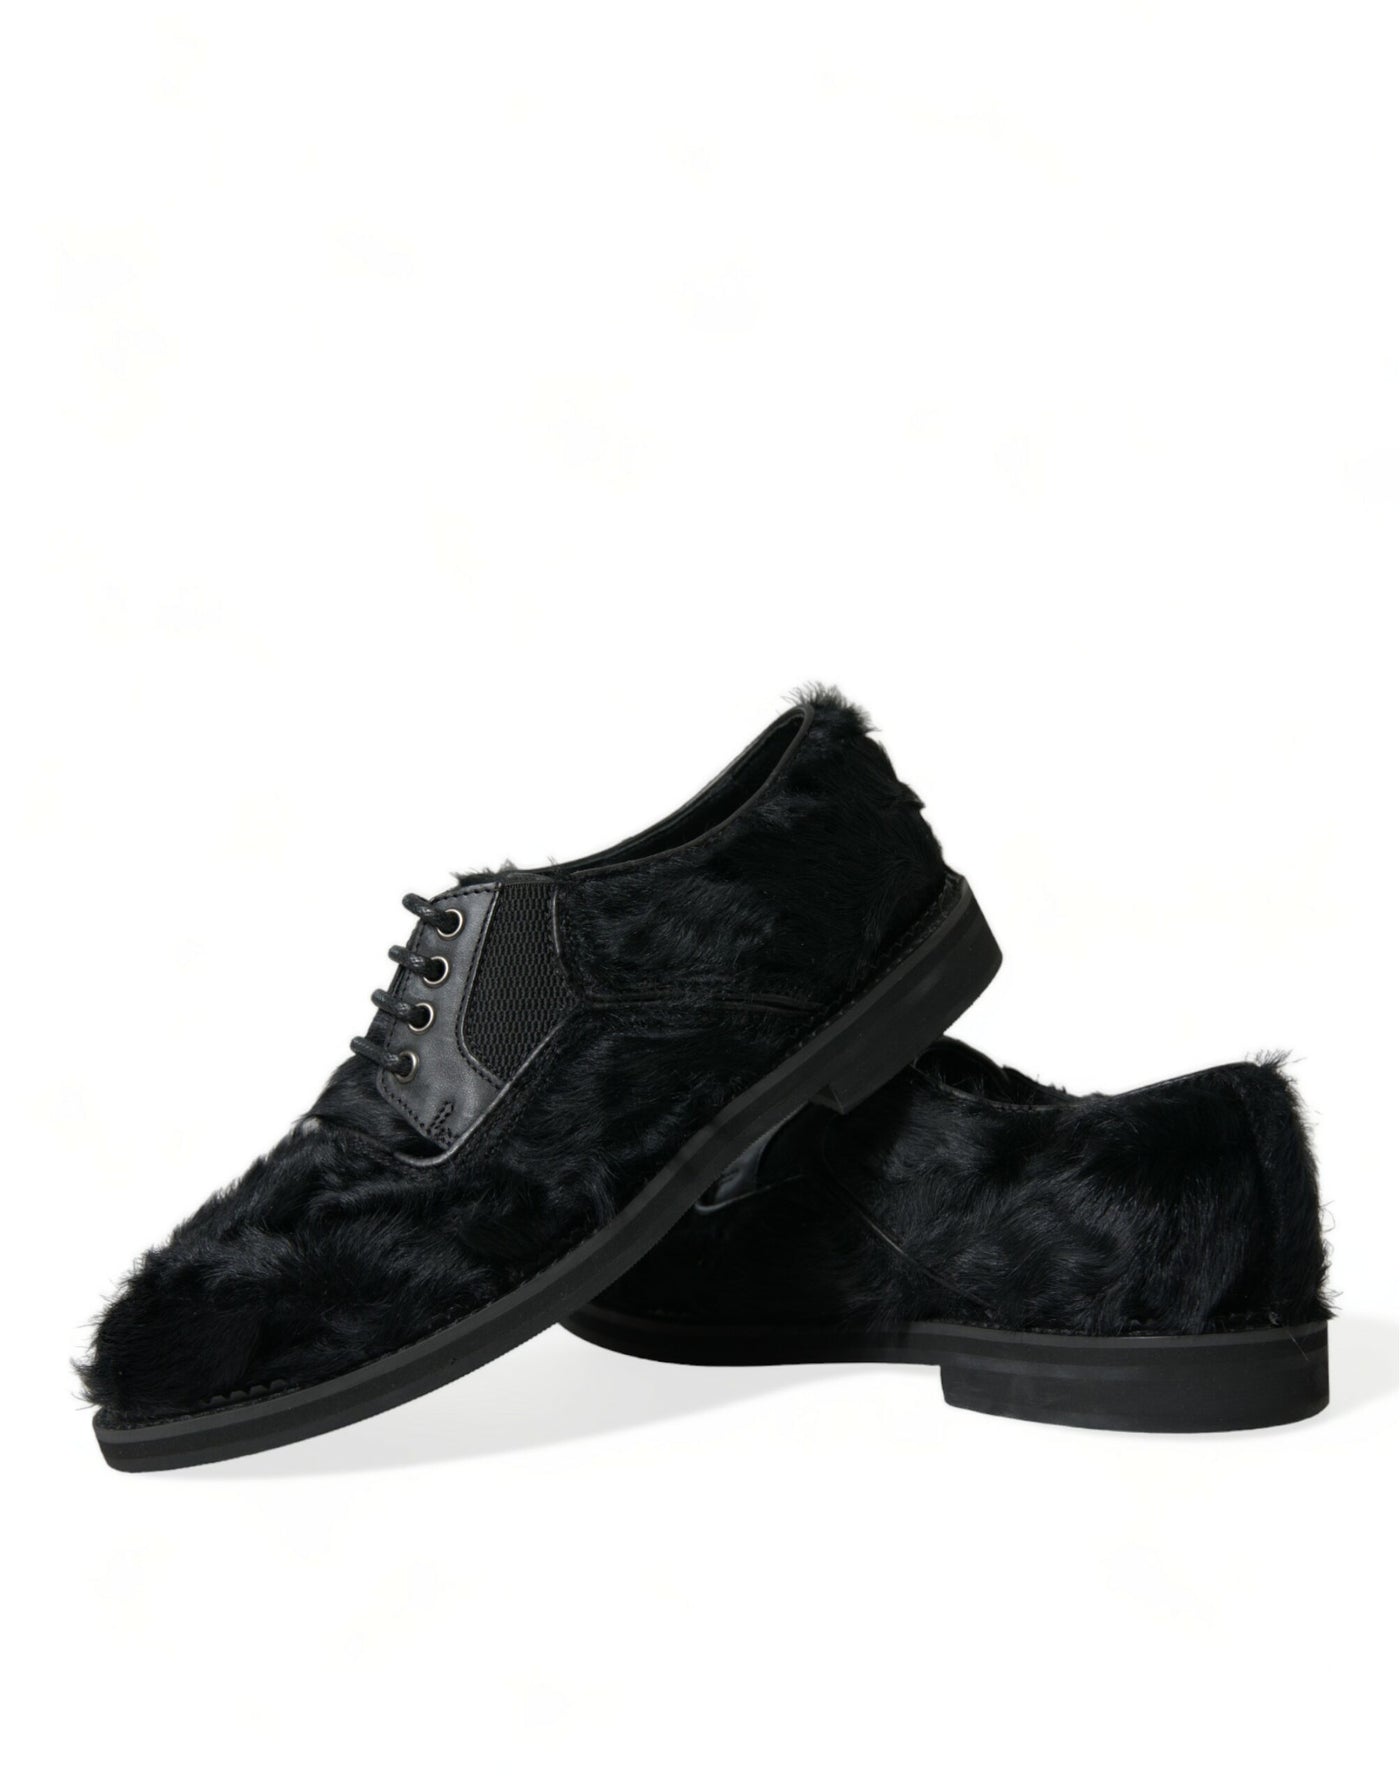 Dolce & Gabbana Black Fur Leather Lace Up Derby Dress Shoes